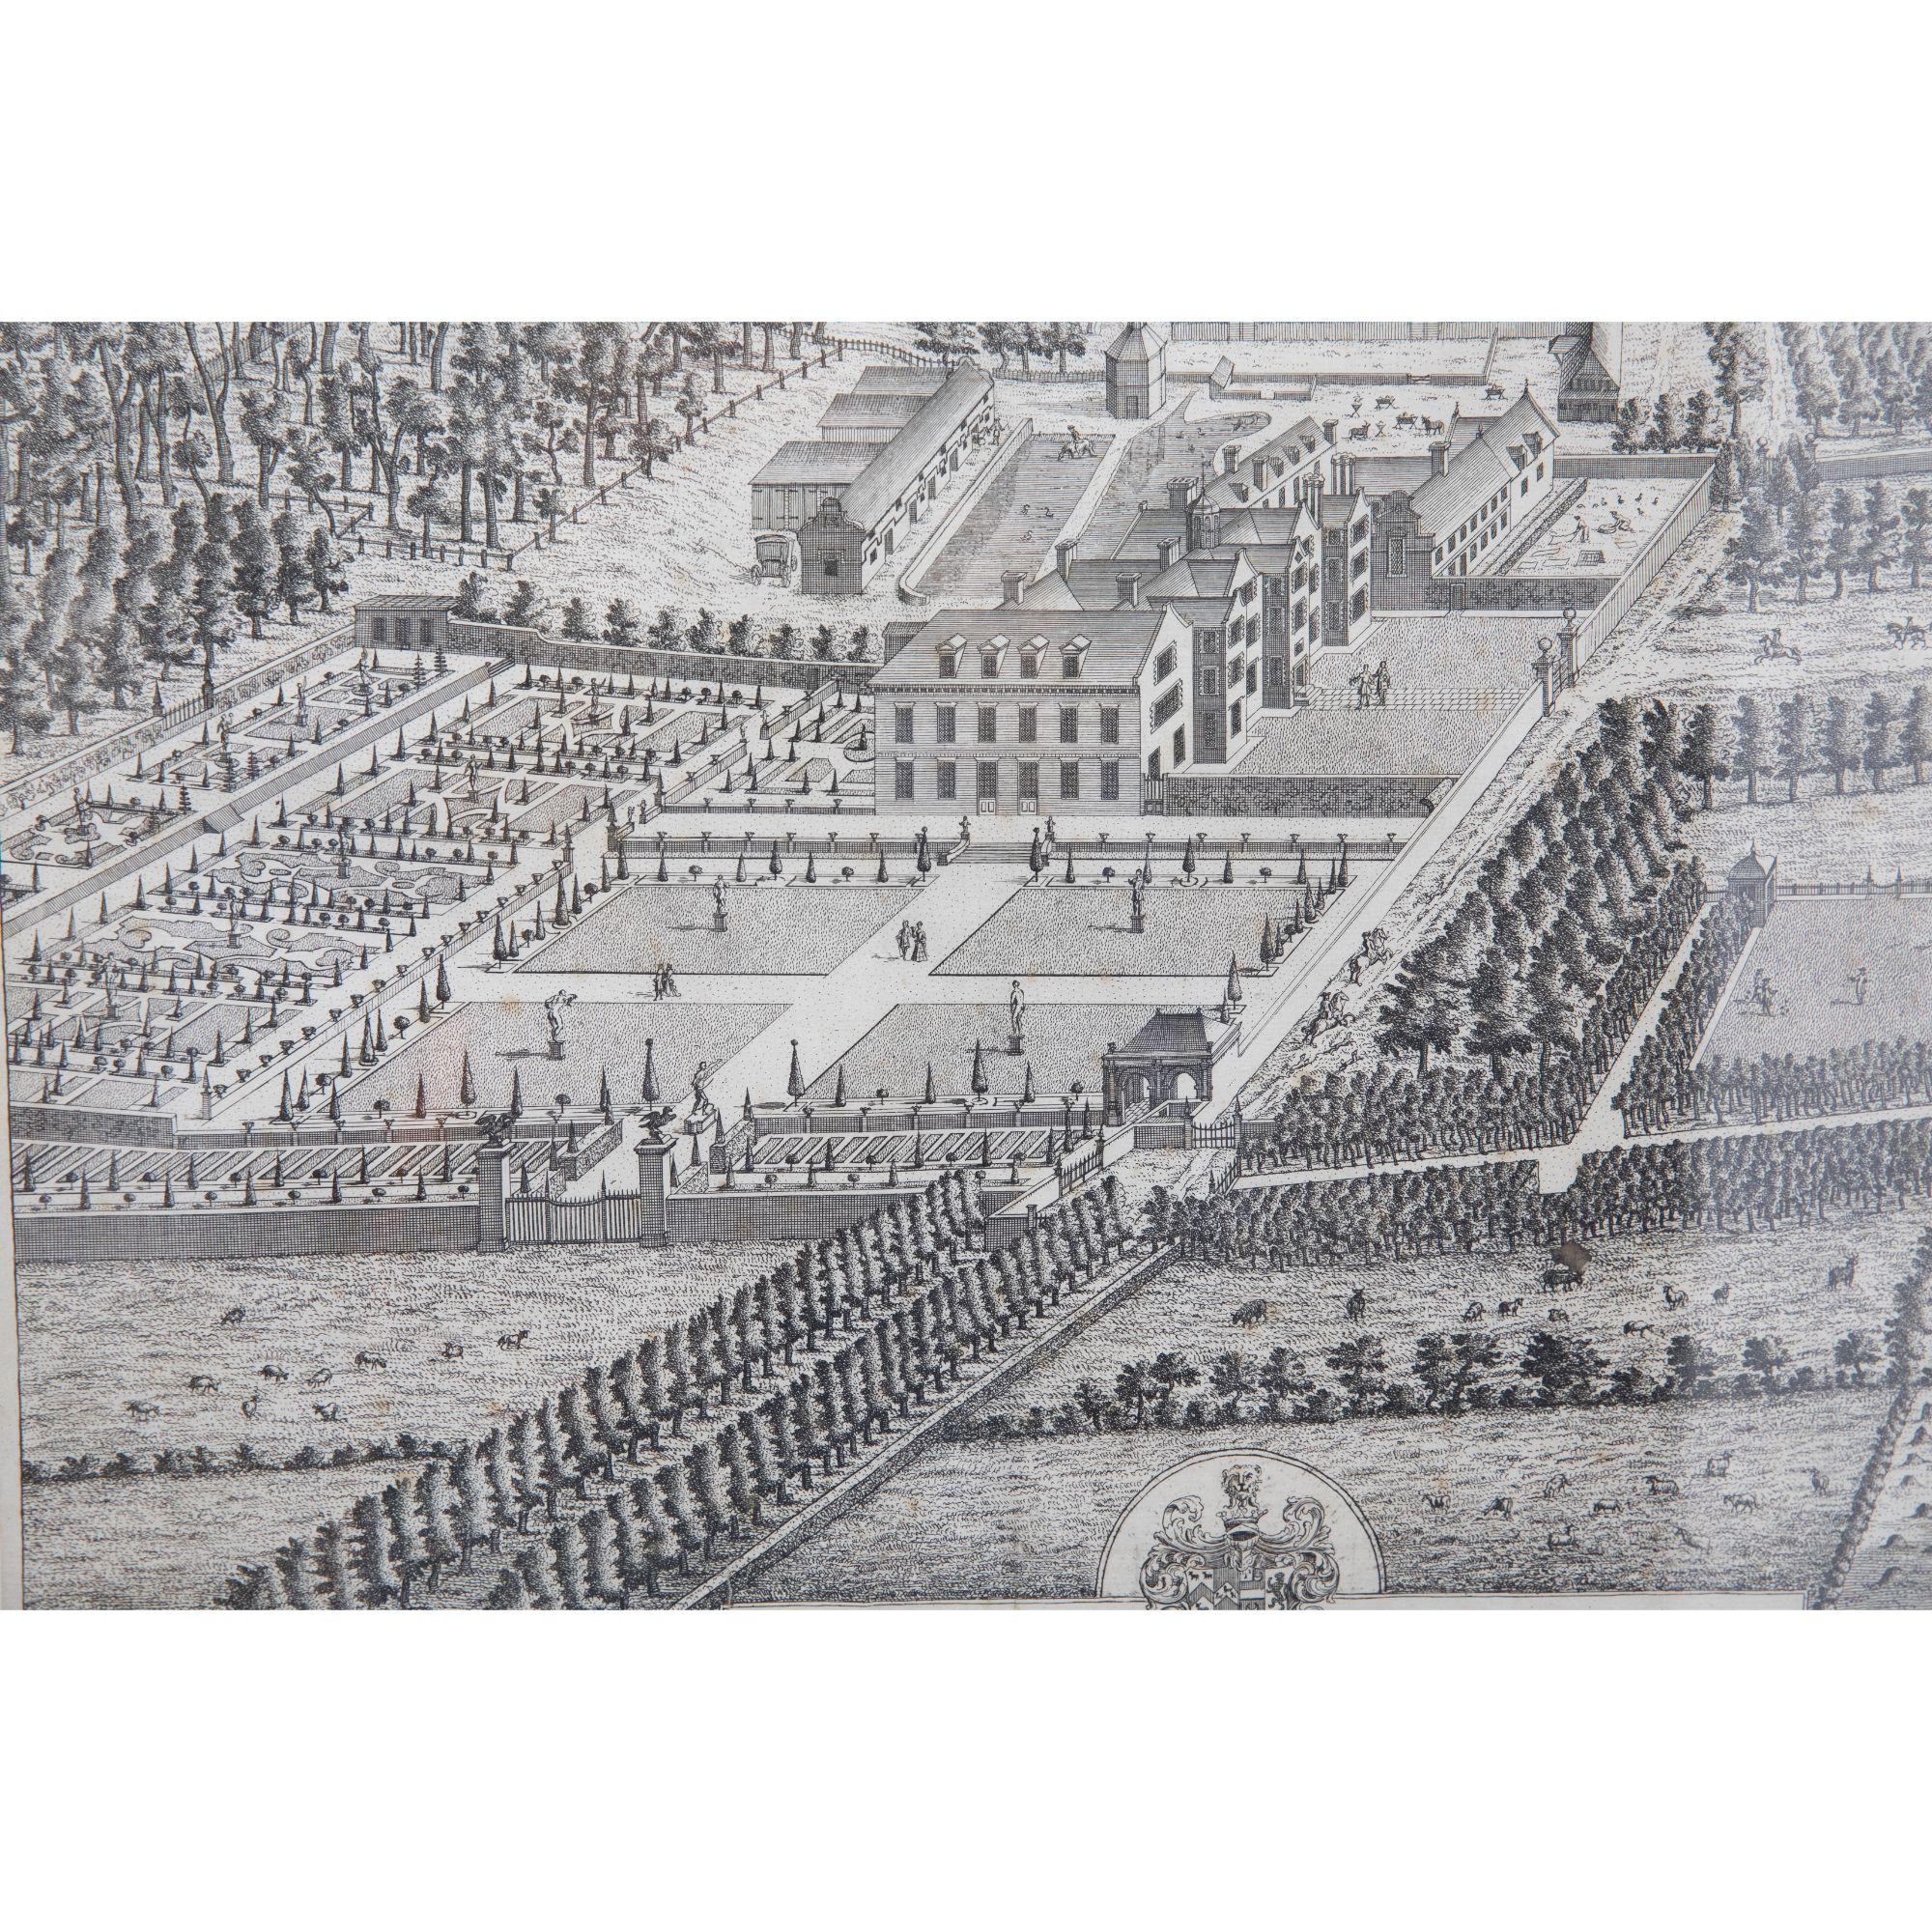 John Harris nach Thomas Badeslade – Gravur des 18. Jahrhunderts, Deane House im Angebot 1